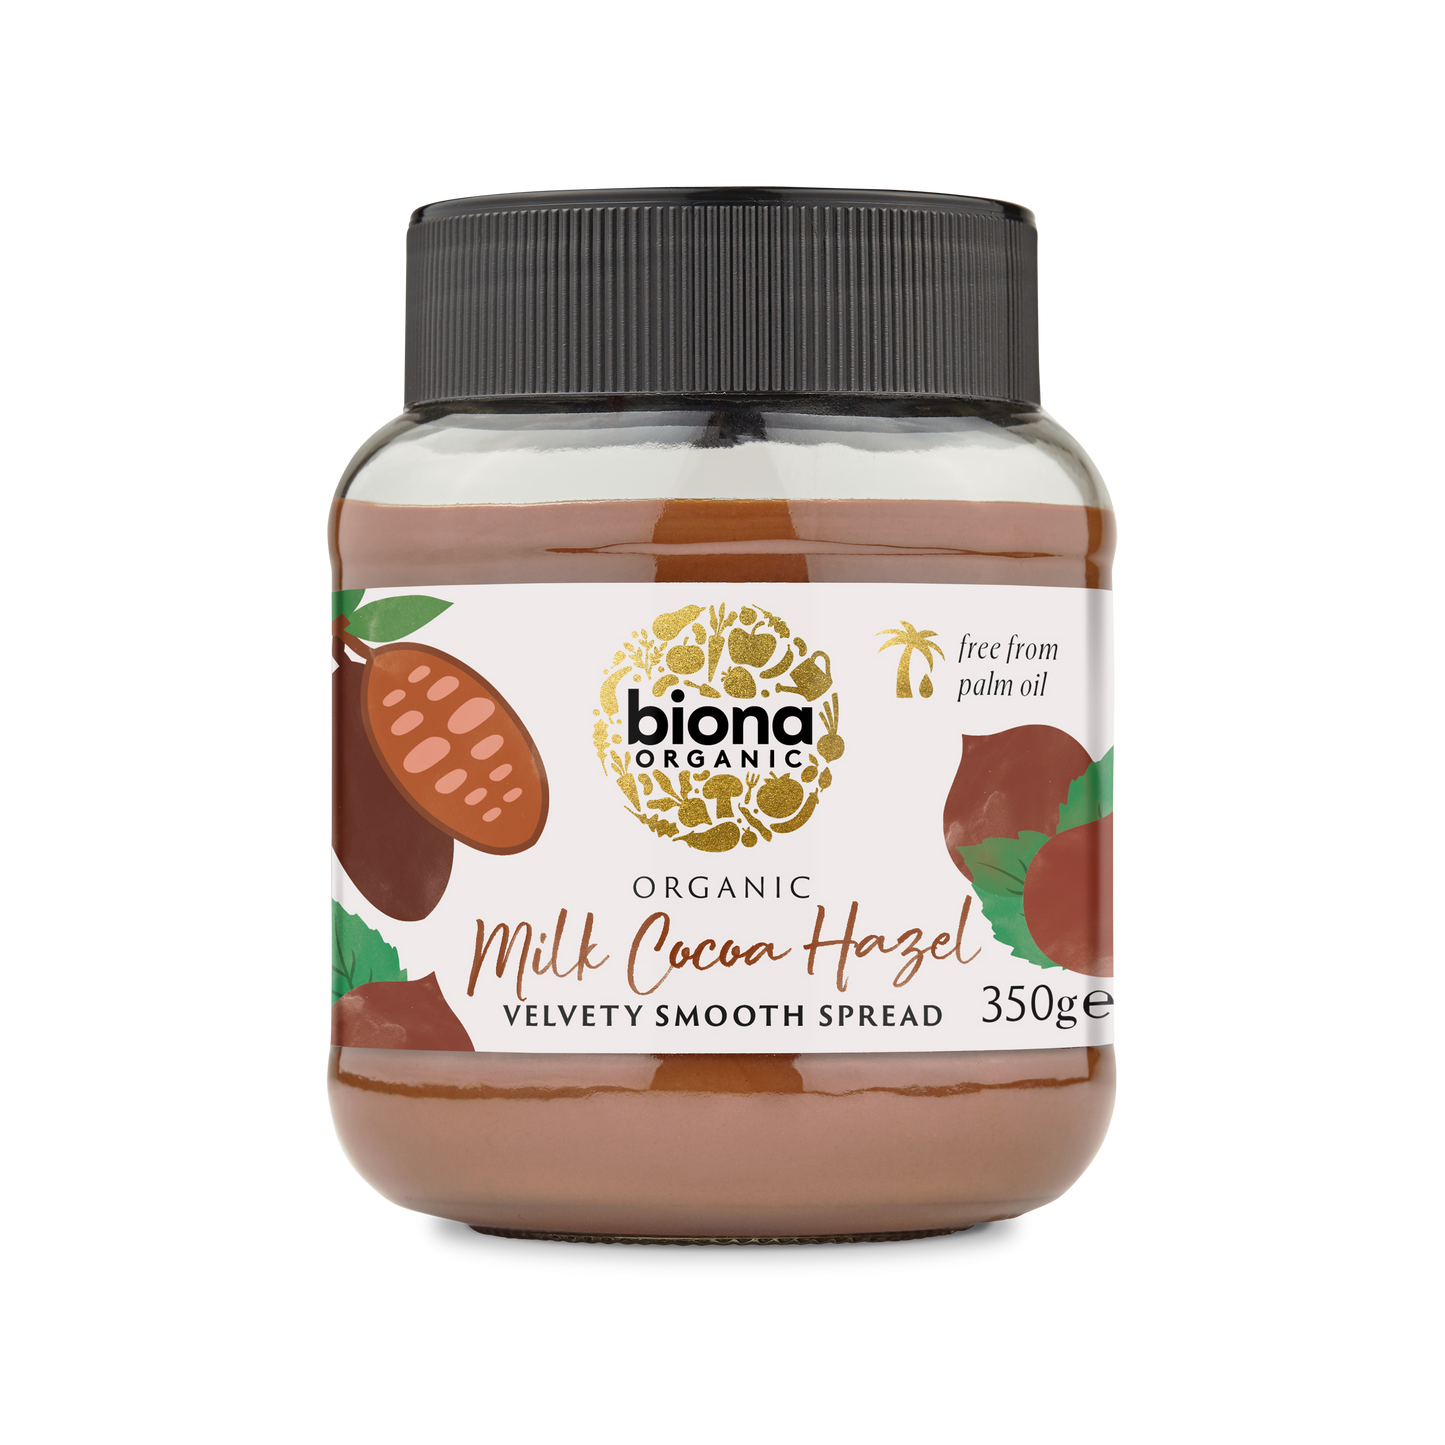 Biona Milk Cocoa Hazel Spread 350g